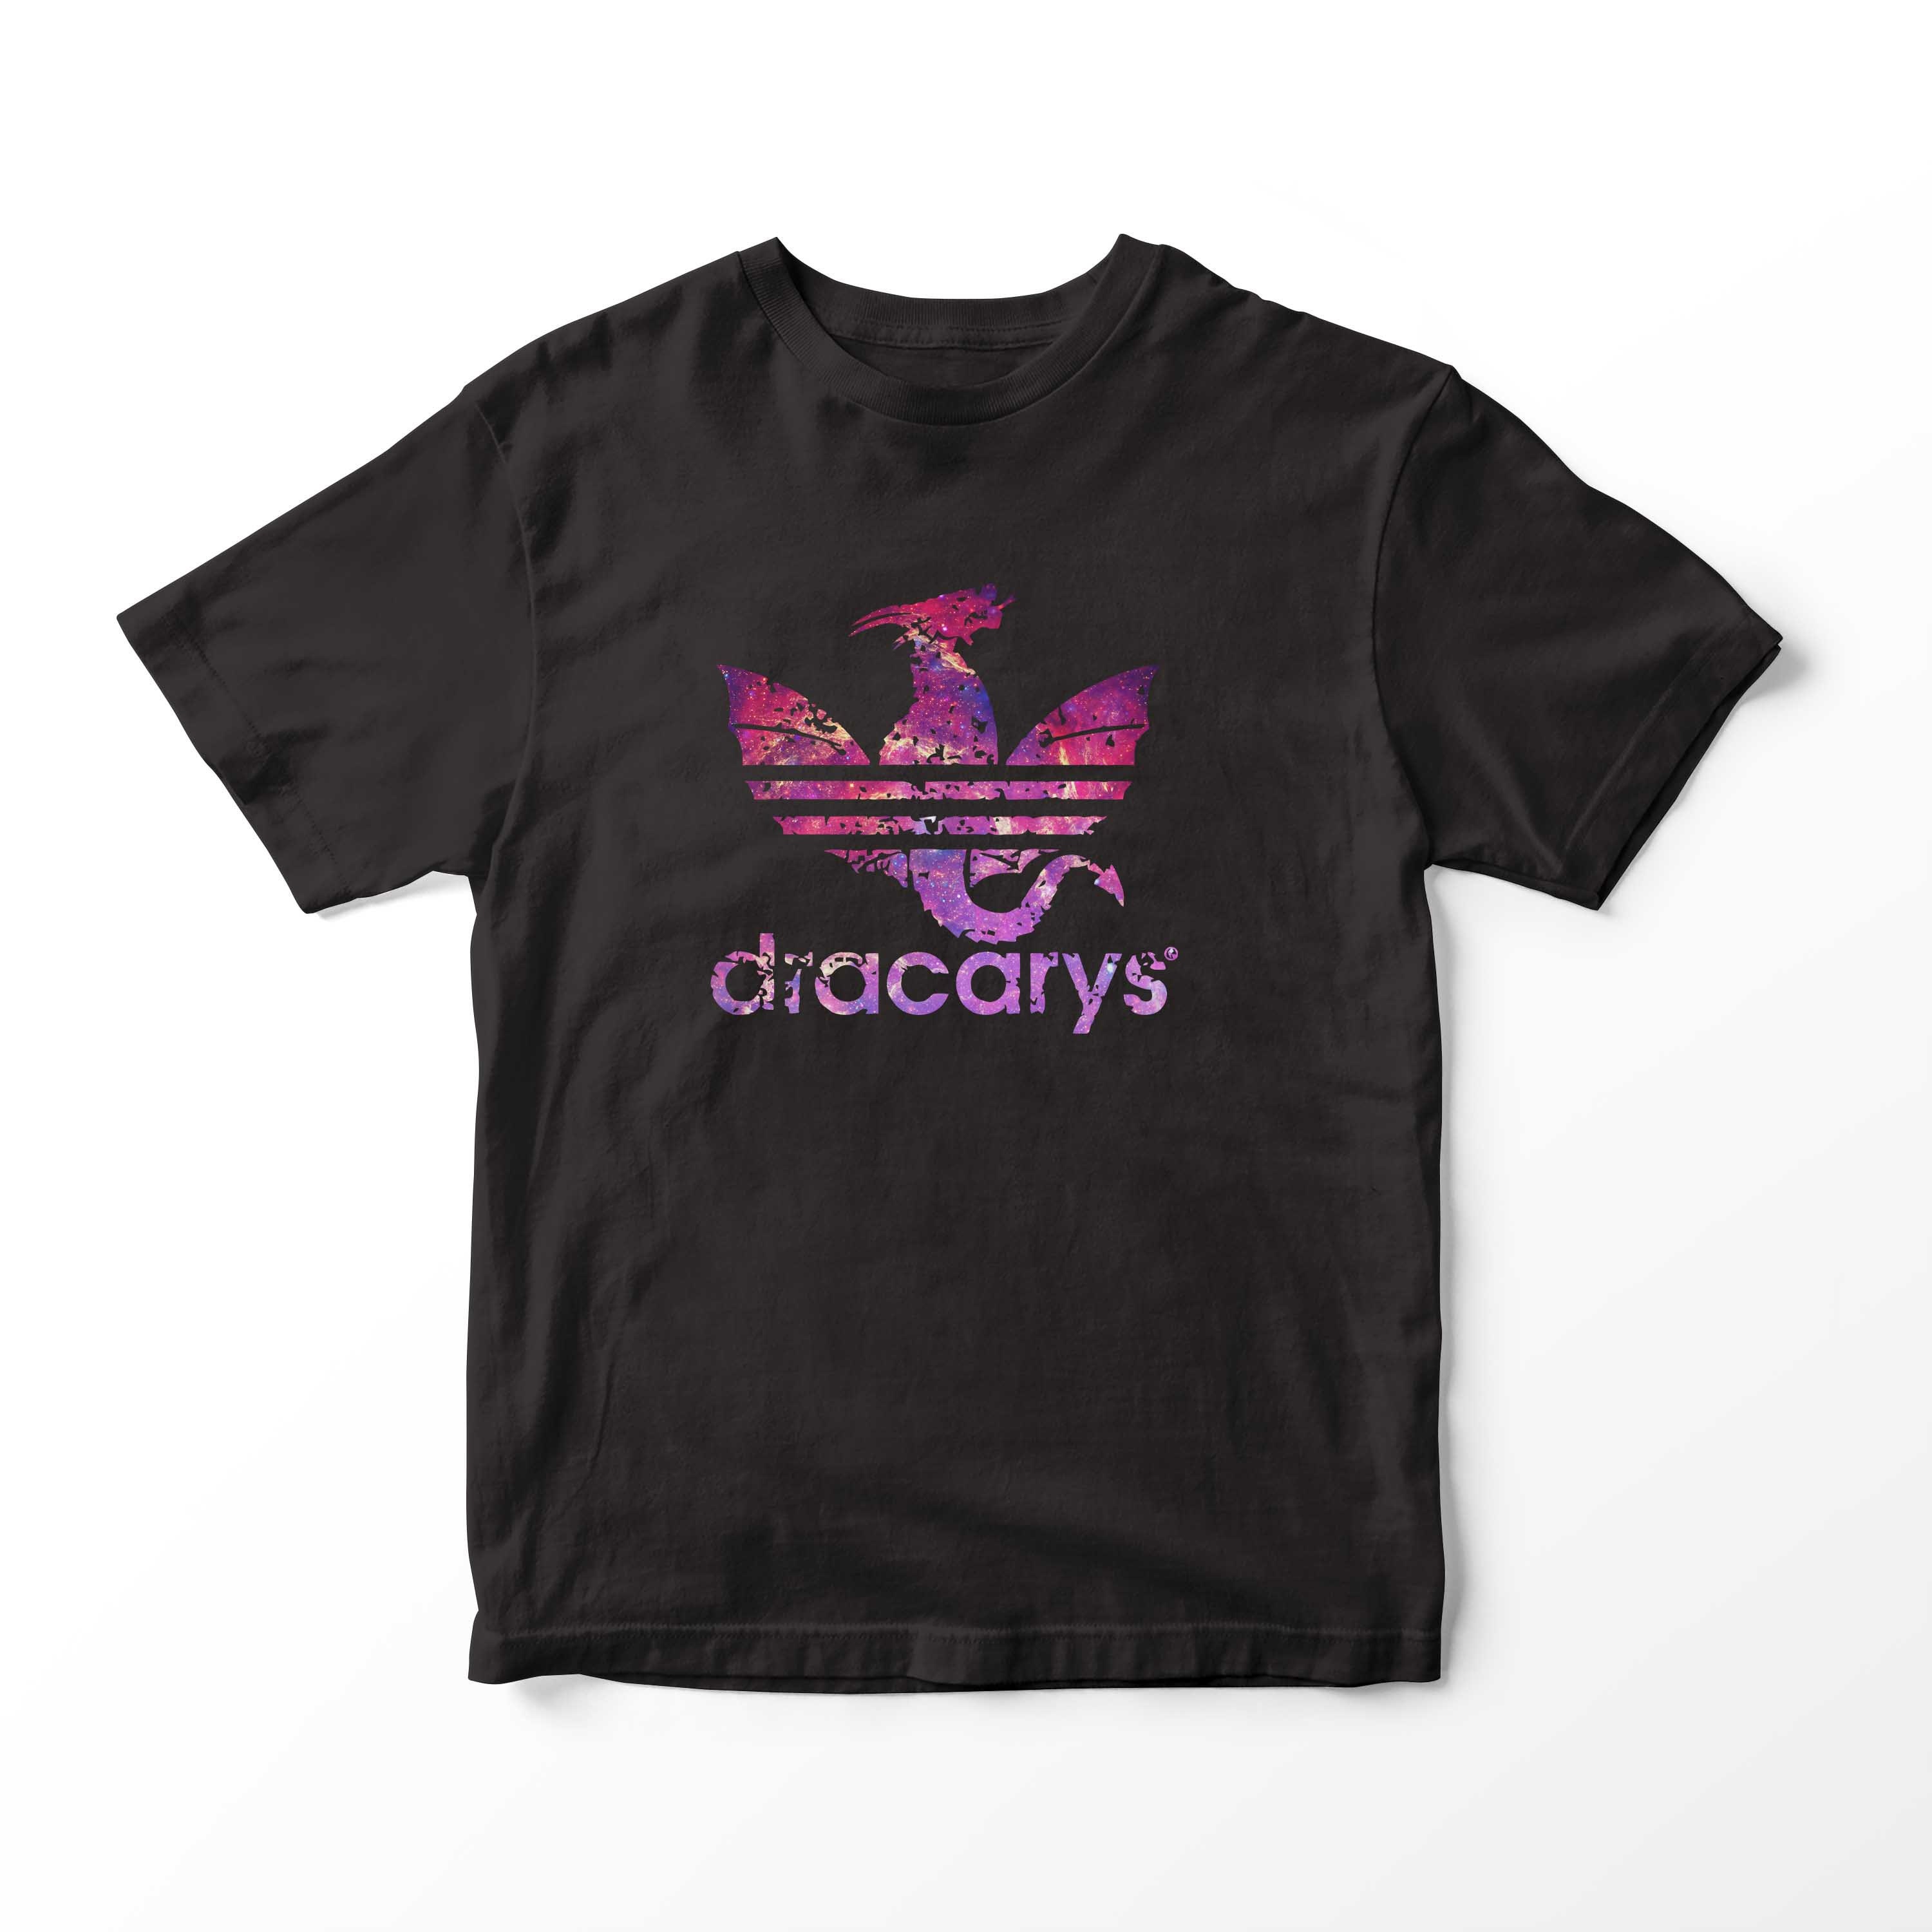 Dracarys t shirt - Etsy